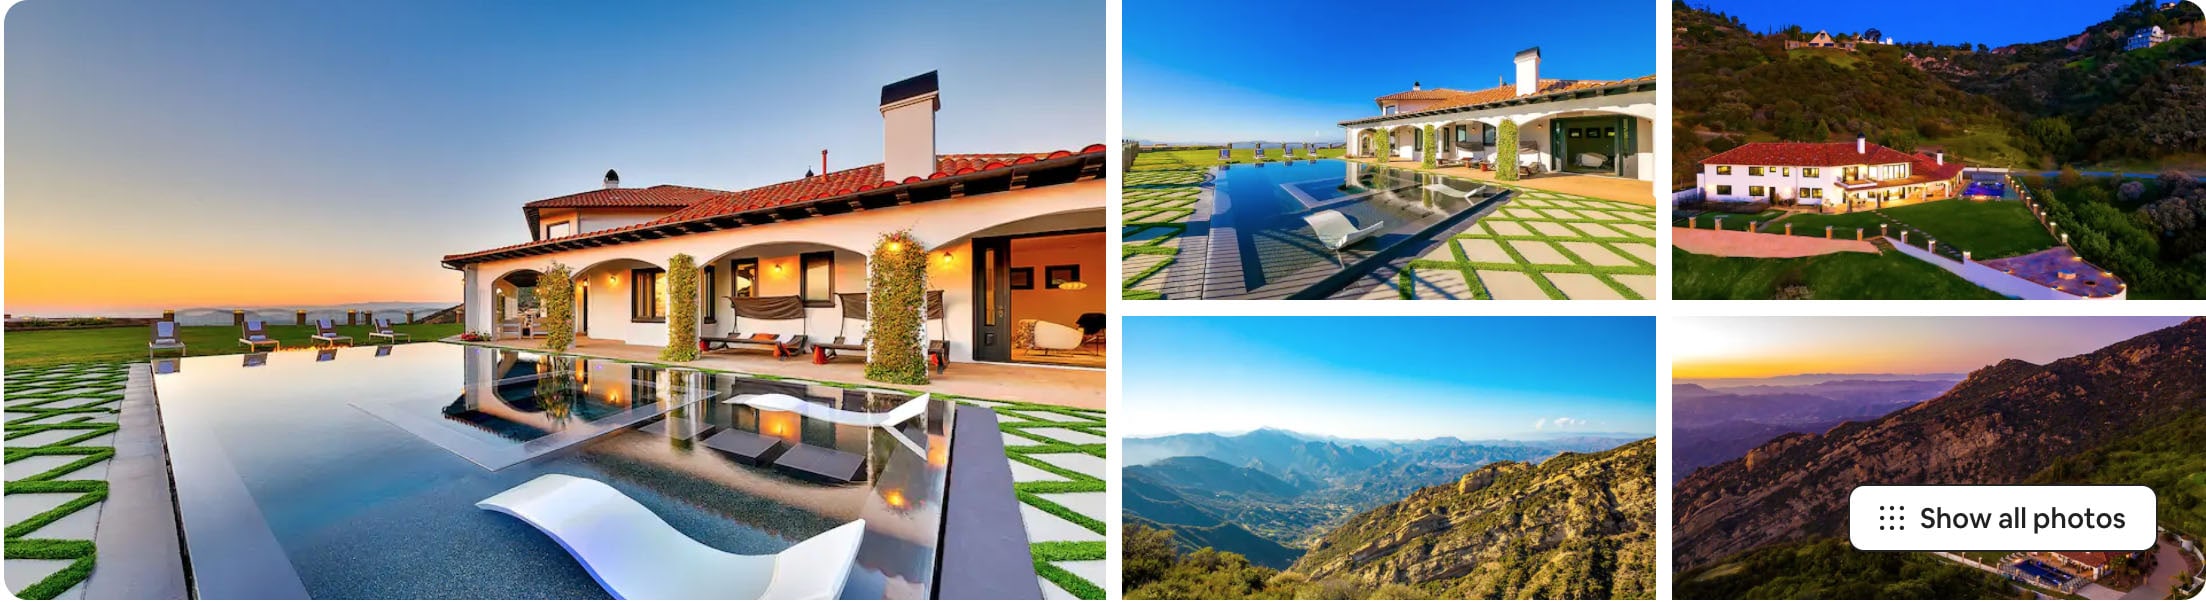 malibu garden estate - modern beach airbnb wedding venues in southern california